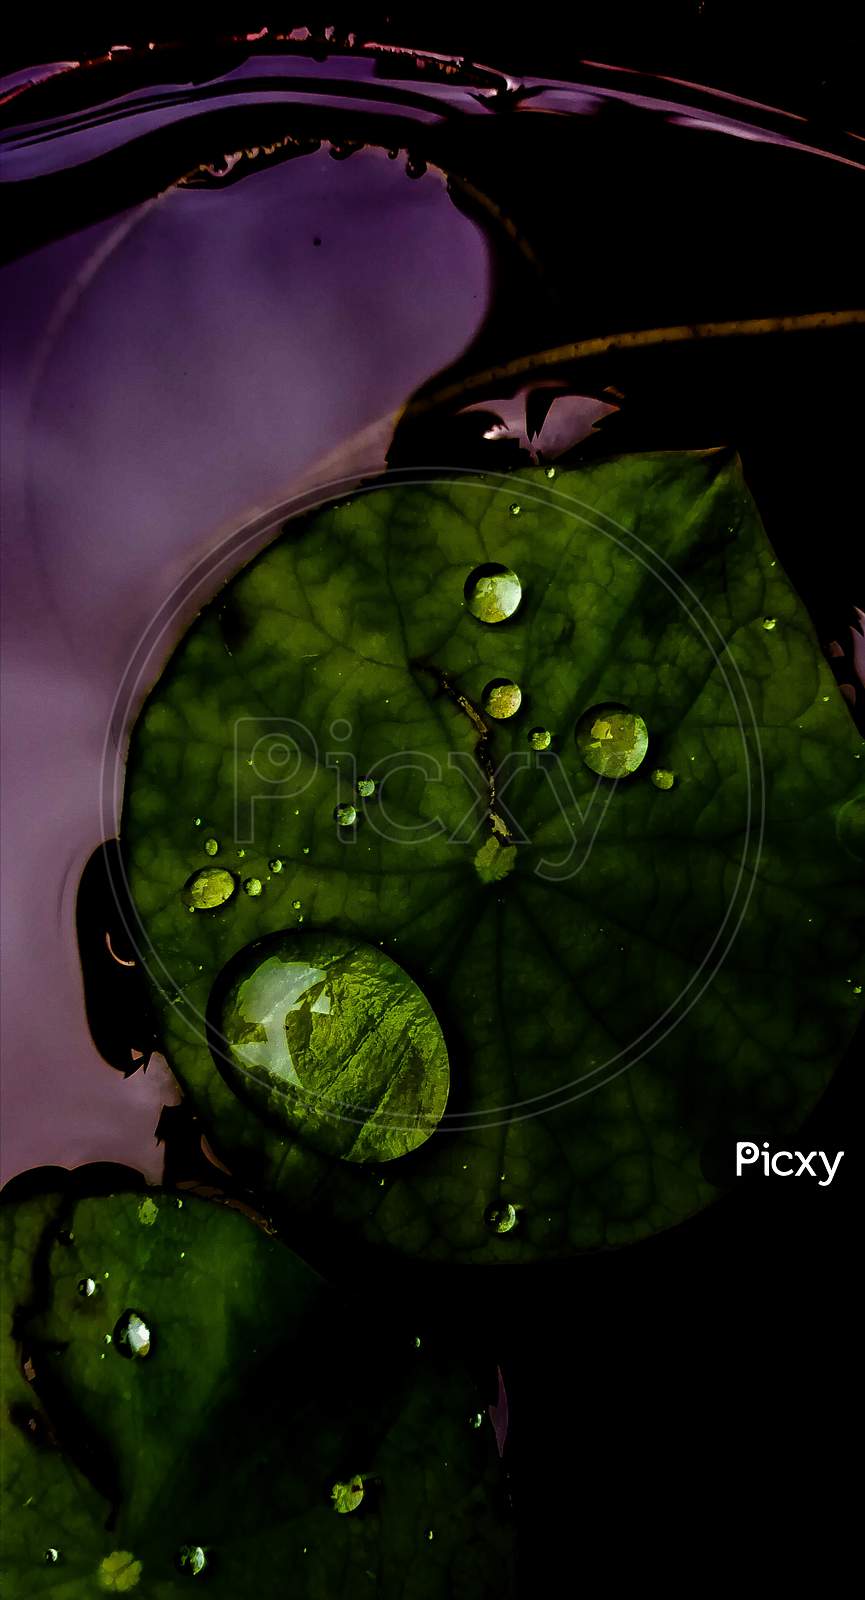 Water droplets on green leaf, macro photos, green leaf